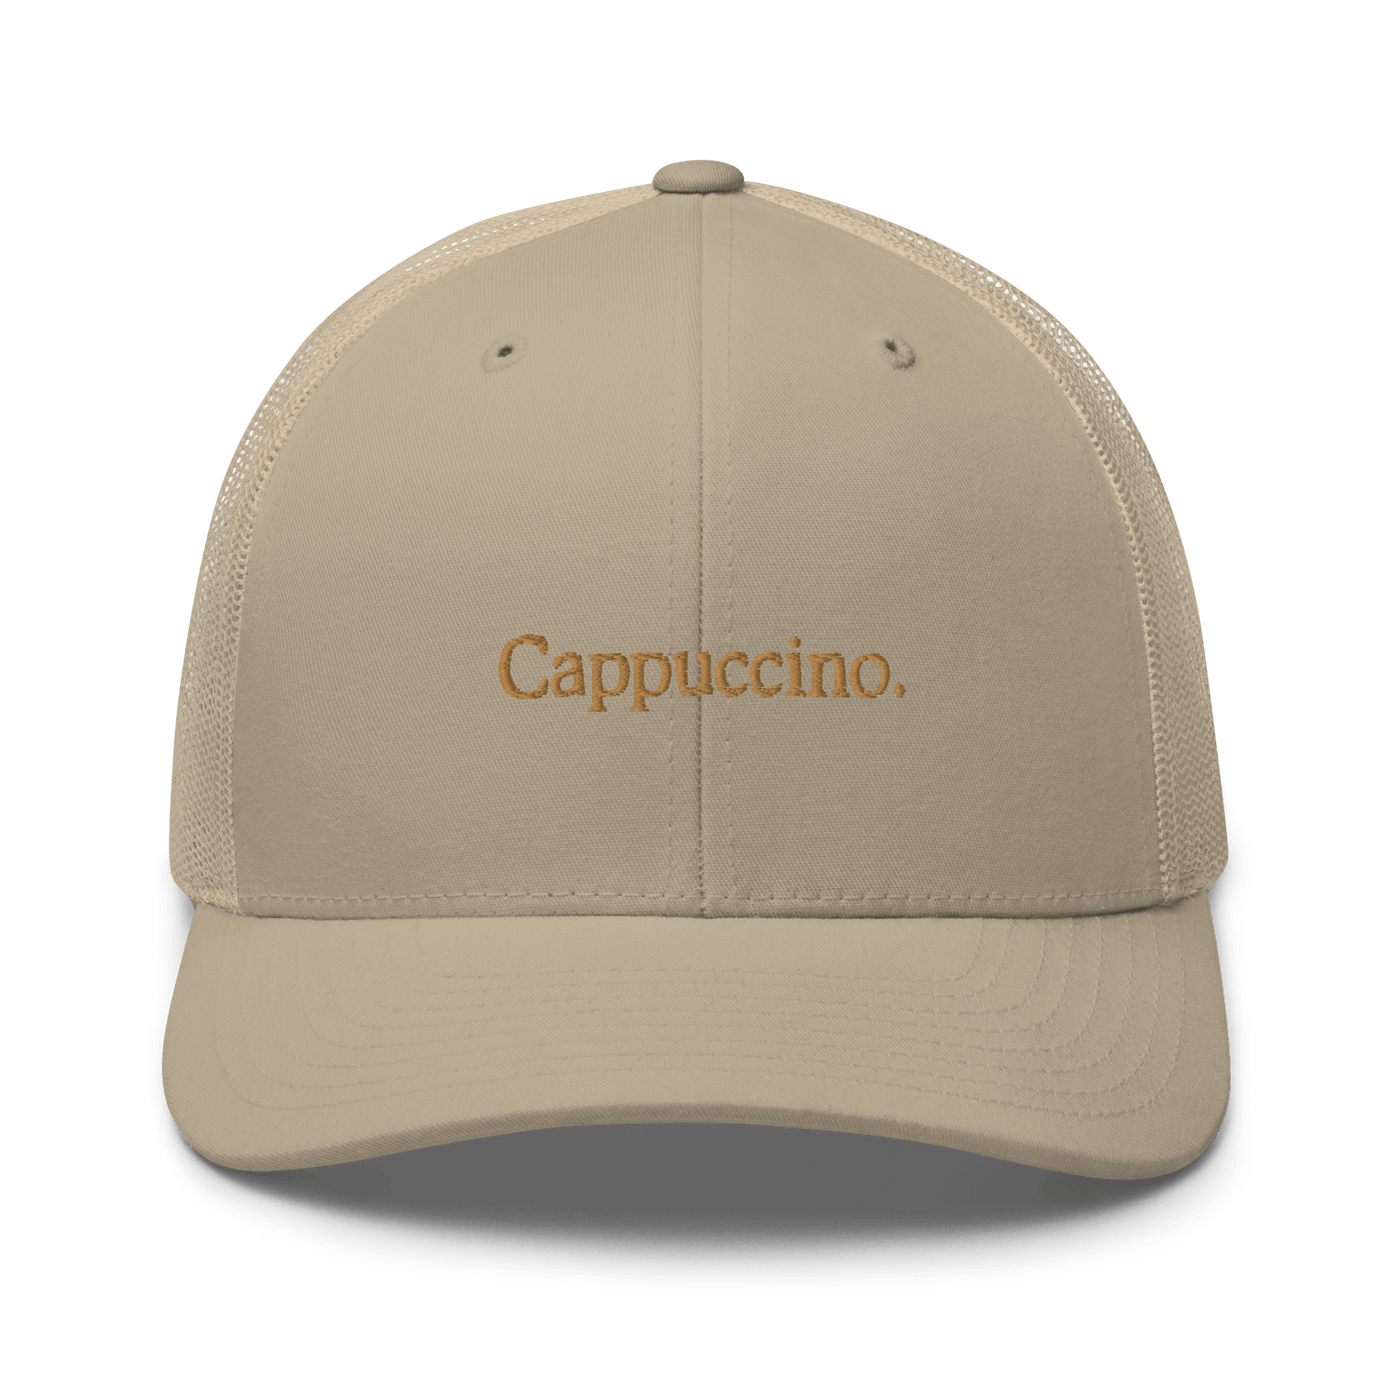 Cappuccino. Trucker Cap - Khaki - - Just Another Cap Store